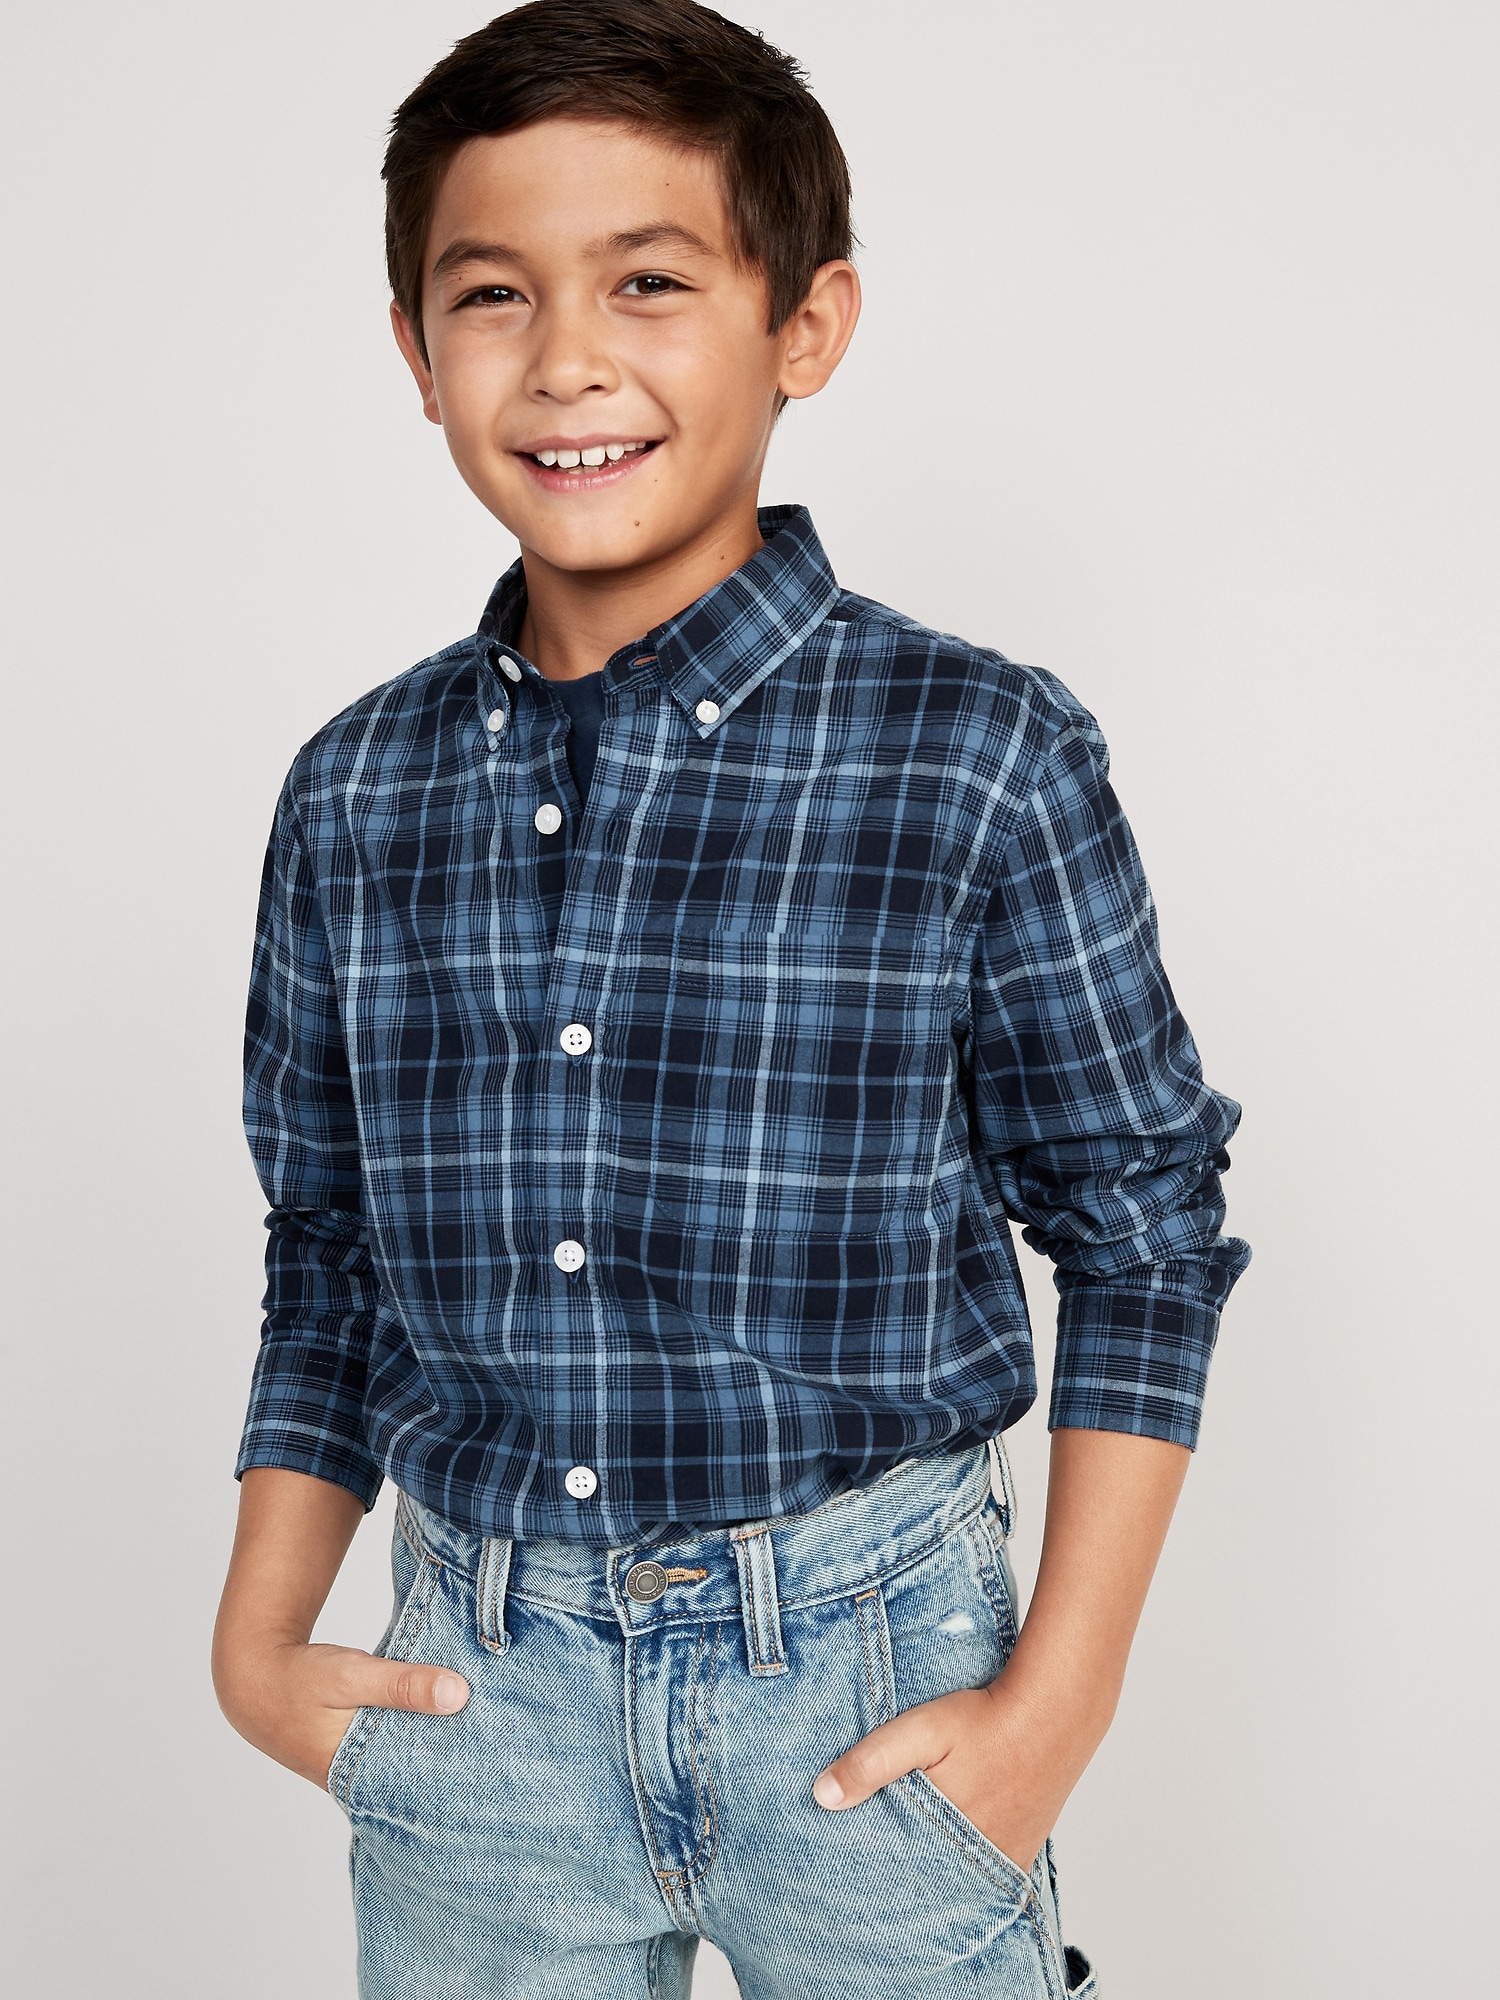 Patterned Poplin Built-In Flex Shirt for Boys